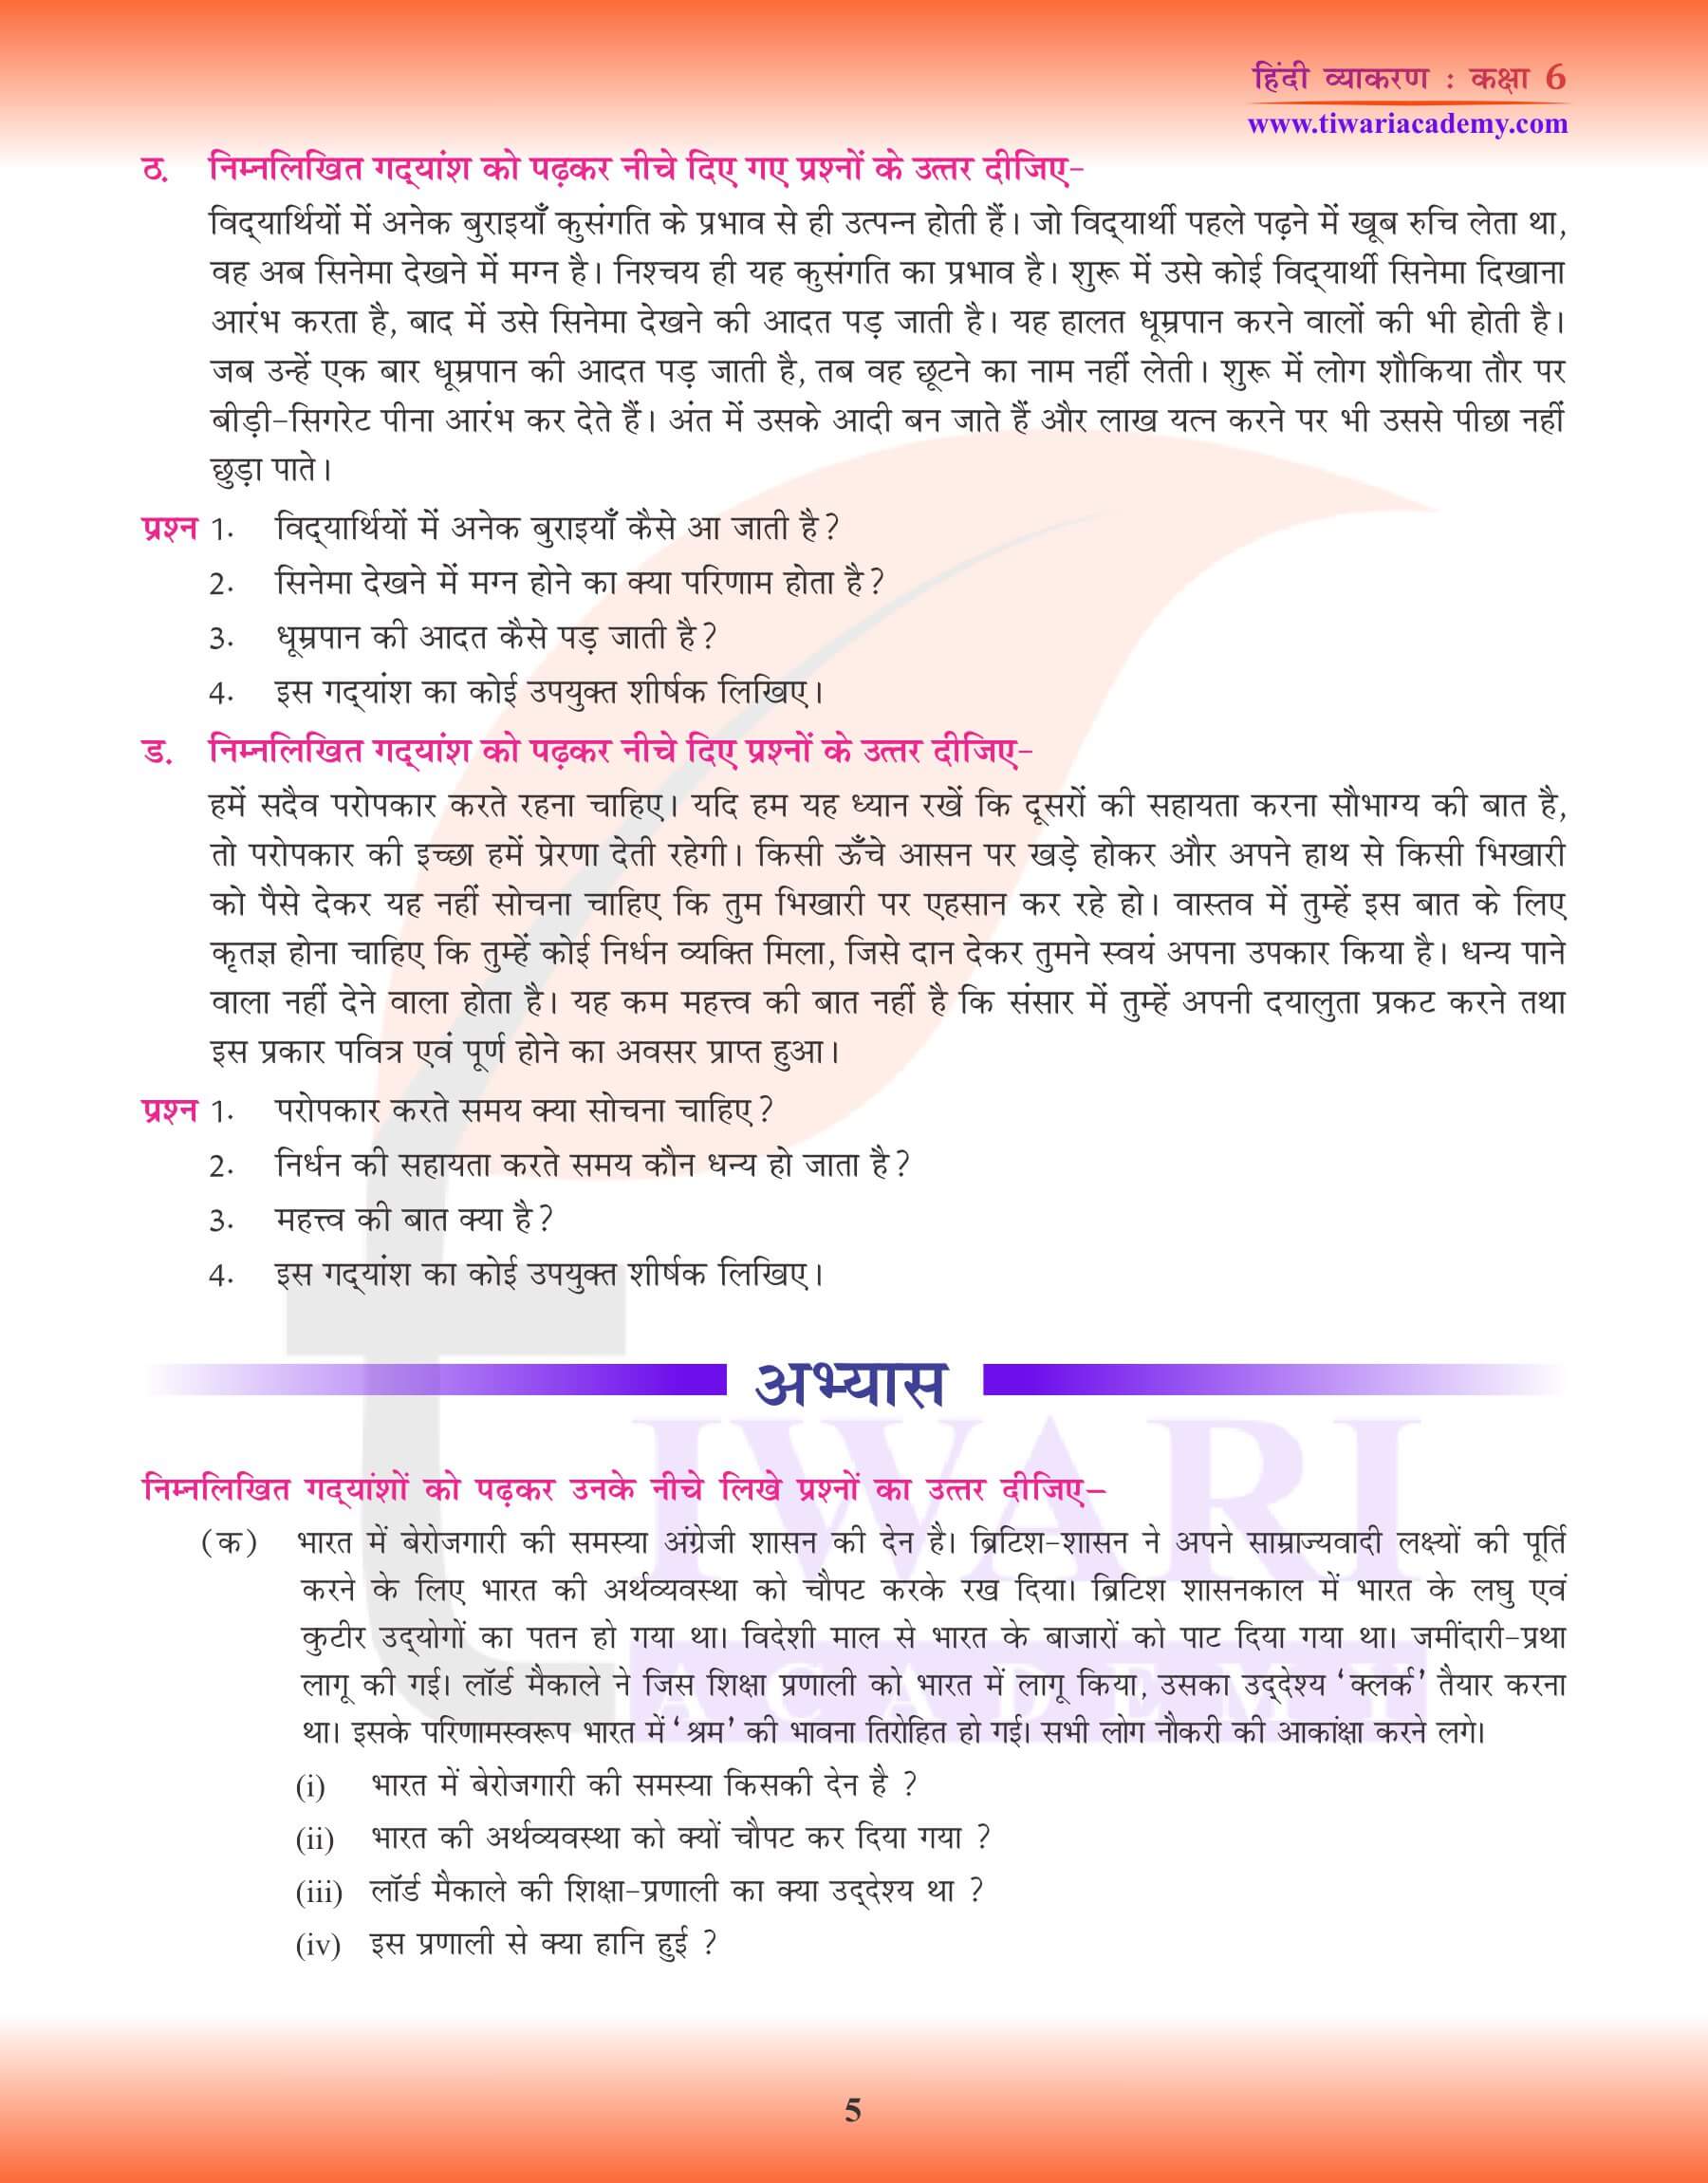 कक्षा 6 हिंदी व्याकरण अपठित गद्यांश अभ्यास प्रश्न